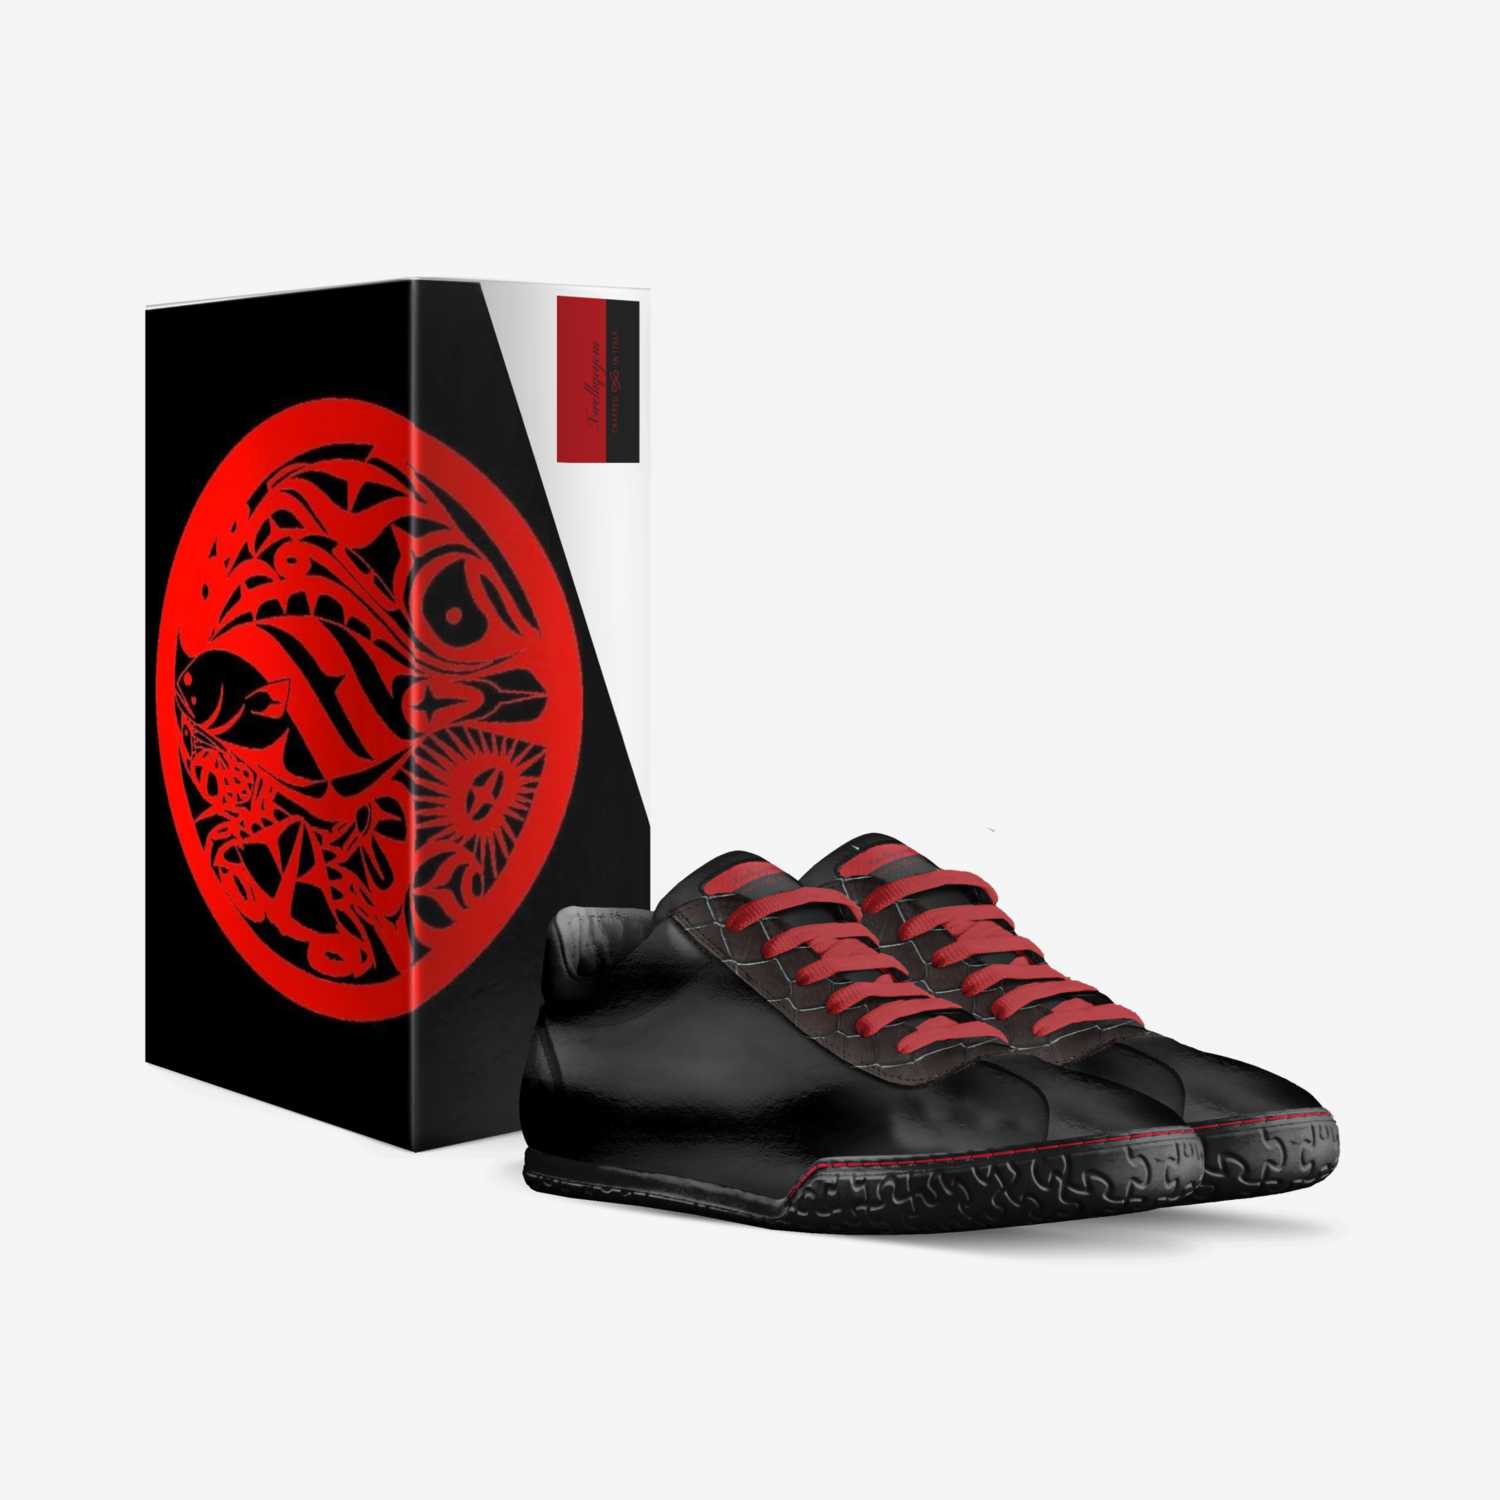 Xwelhqeyem  custom made in Italy shoes by Lucas Washington | Box view